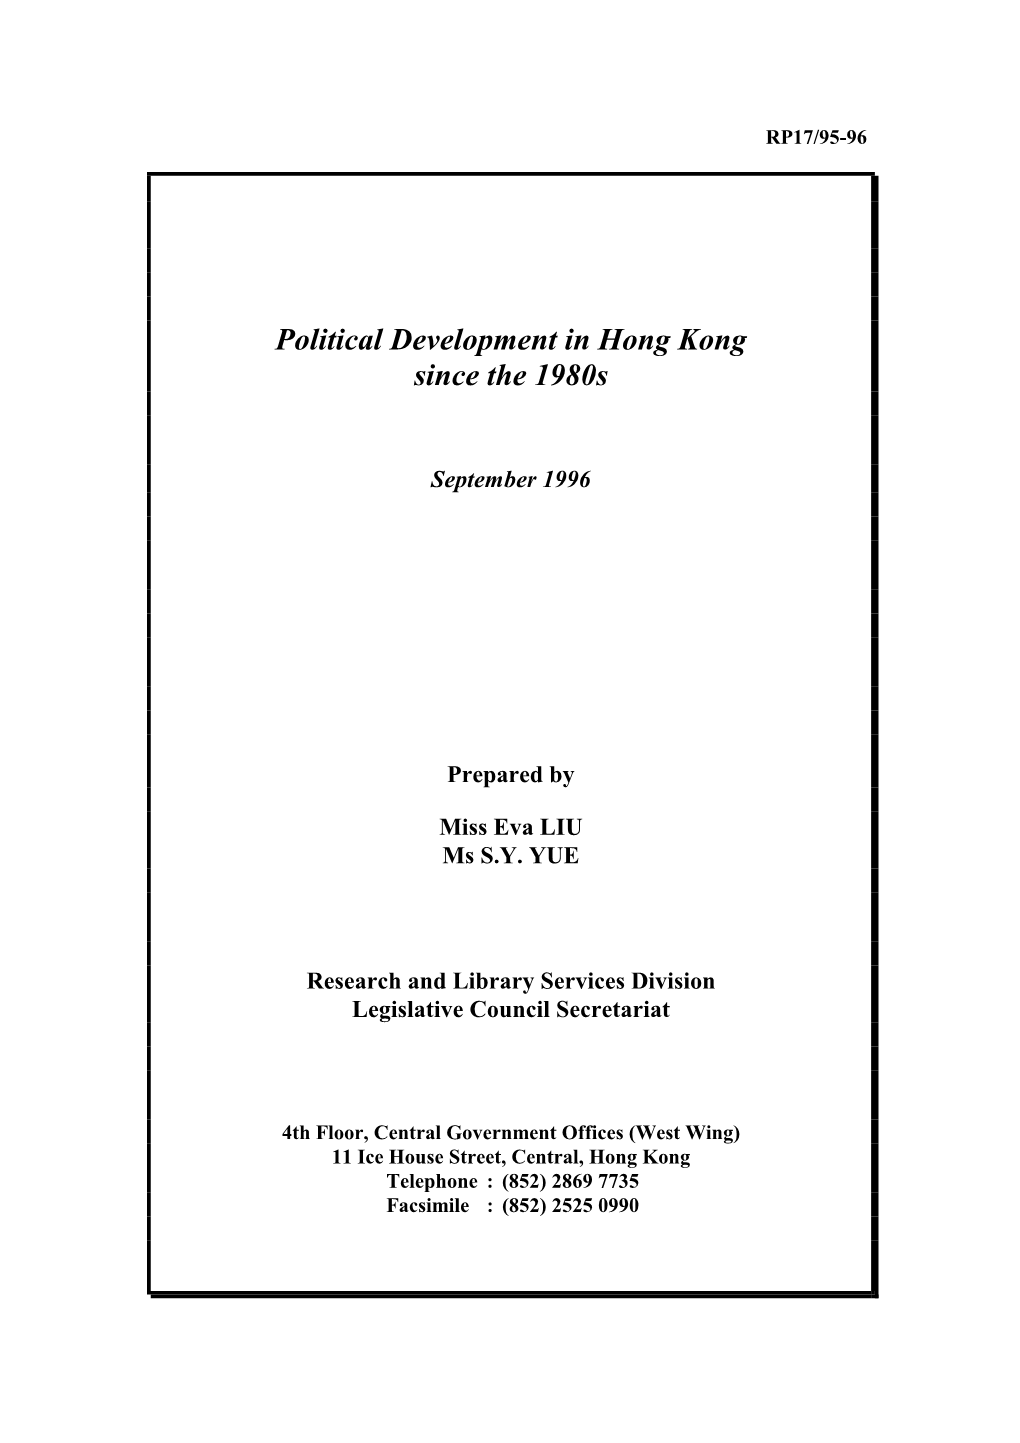 Political Development in Hong Kong Since the 1980S